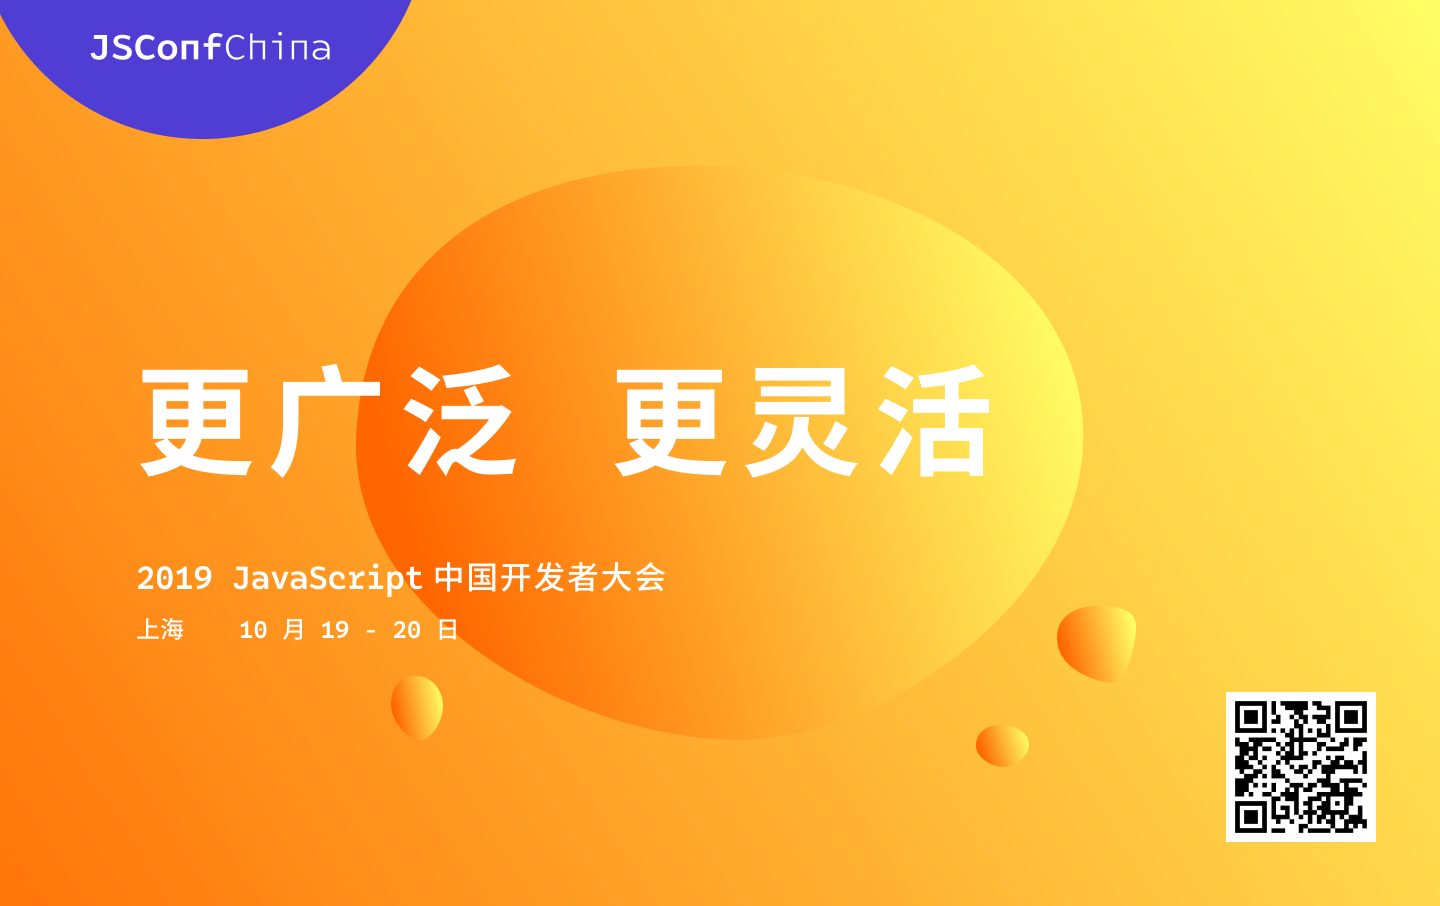 2019 JavaScript 中国开发者大会 | JSConf China 2019